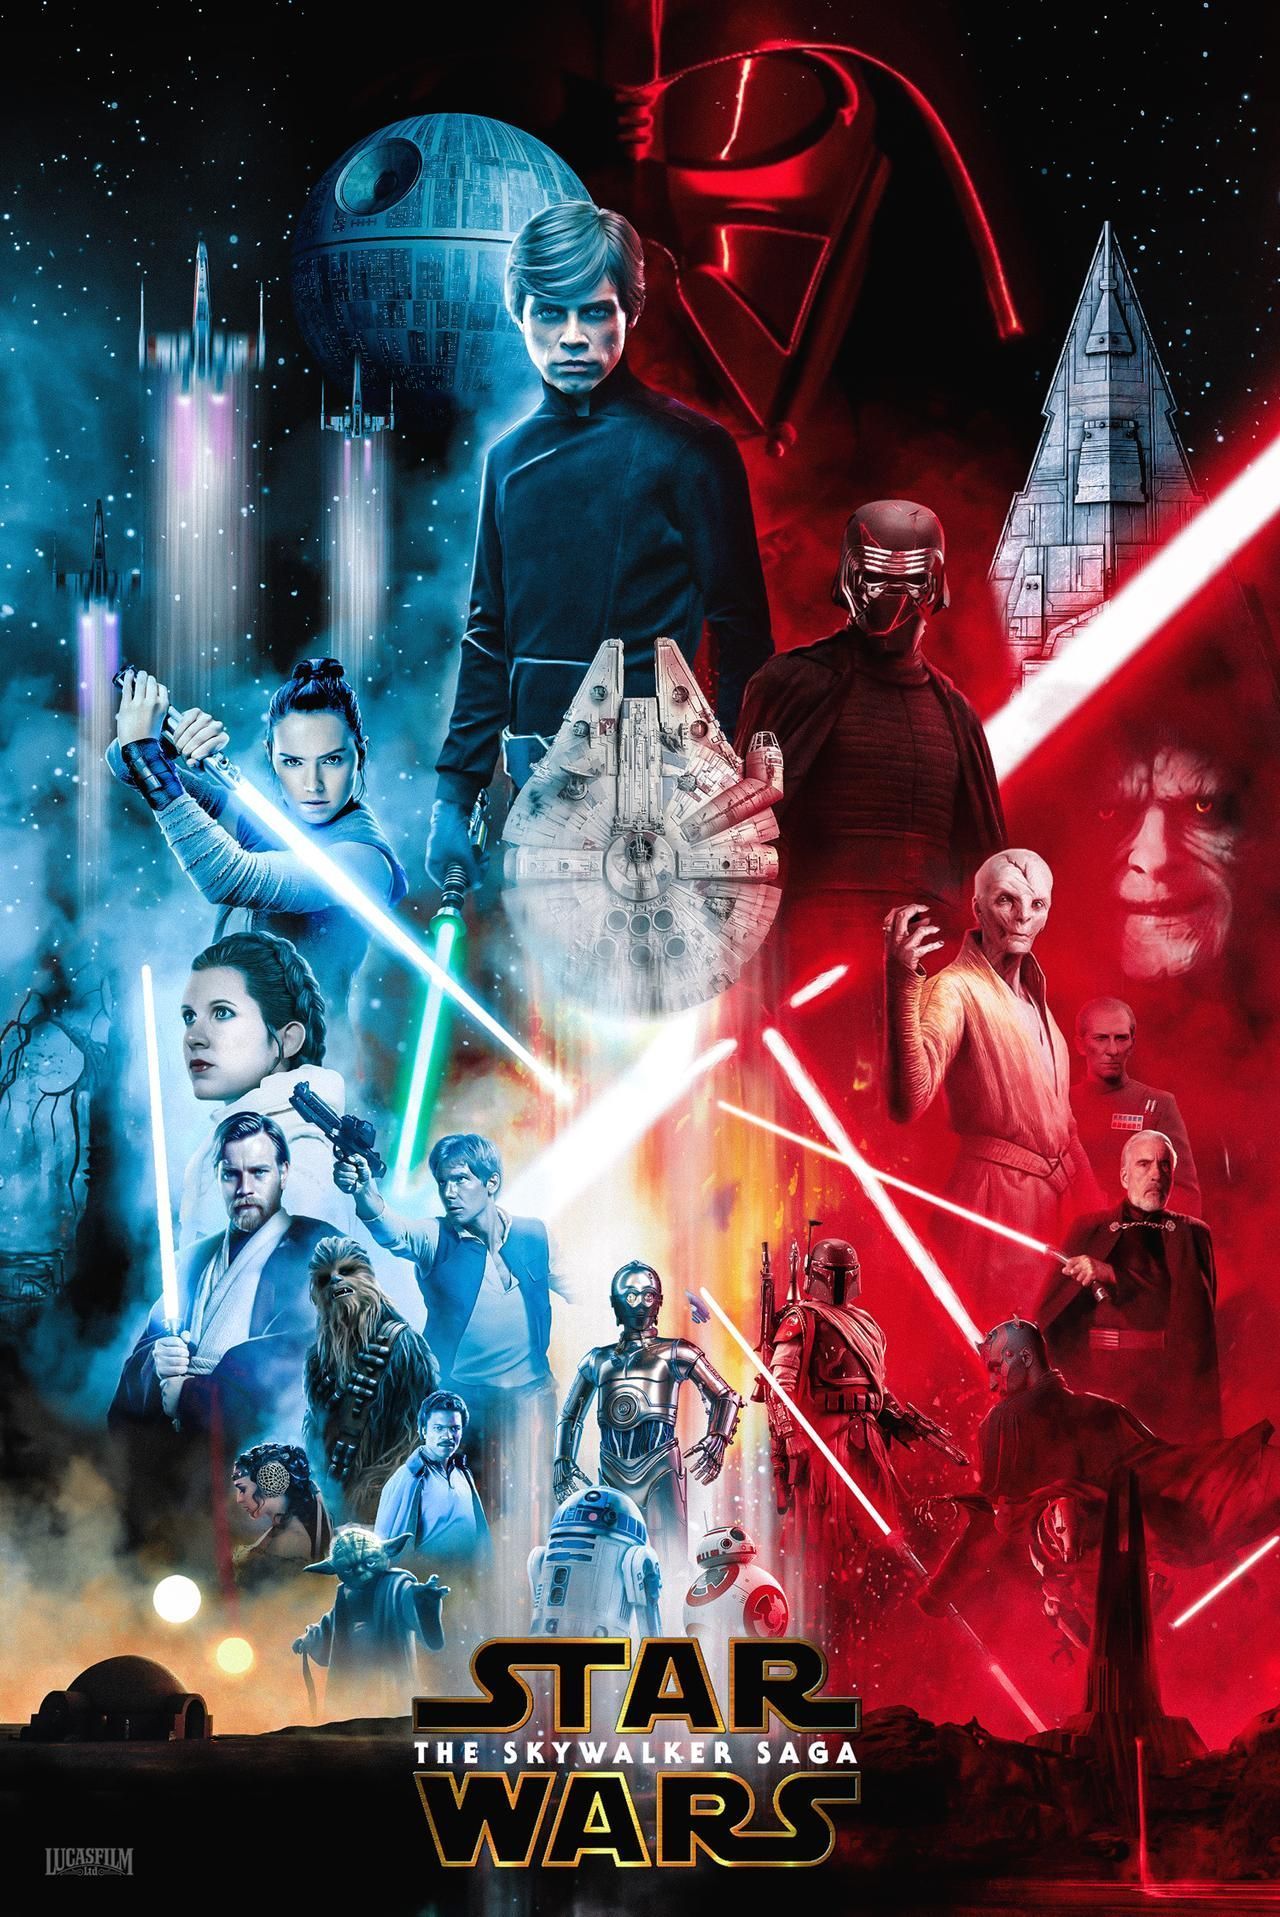 Star Wars: The Skywalker Saga. Star wars picture, Star wars movies posters, Star wars background